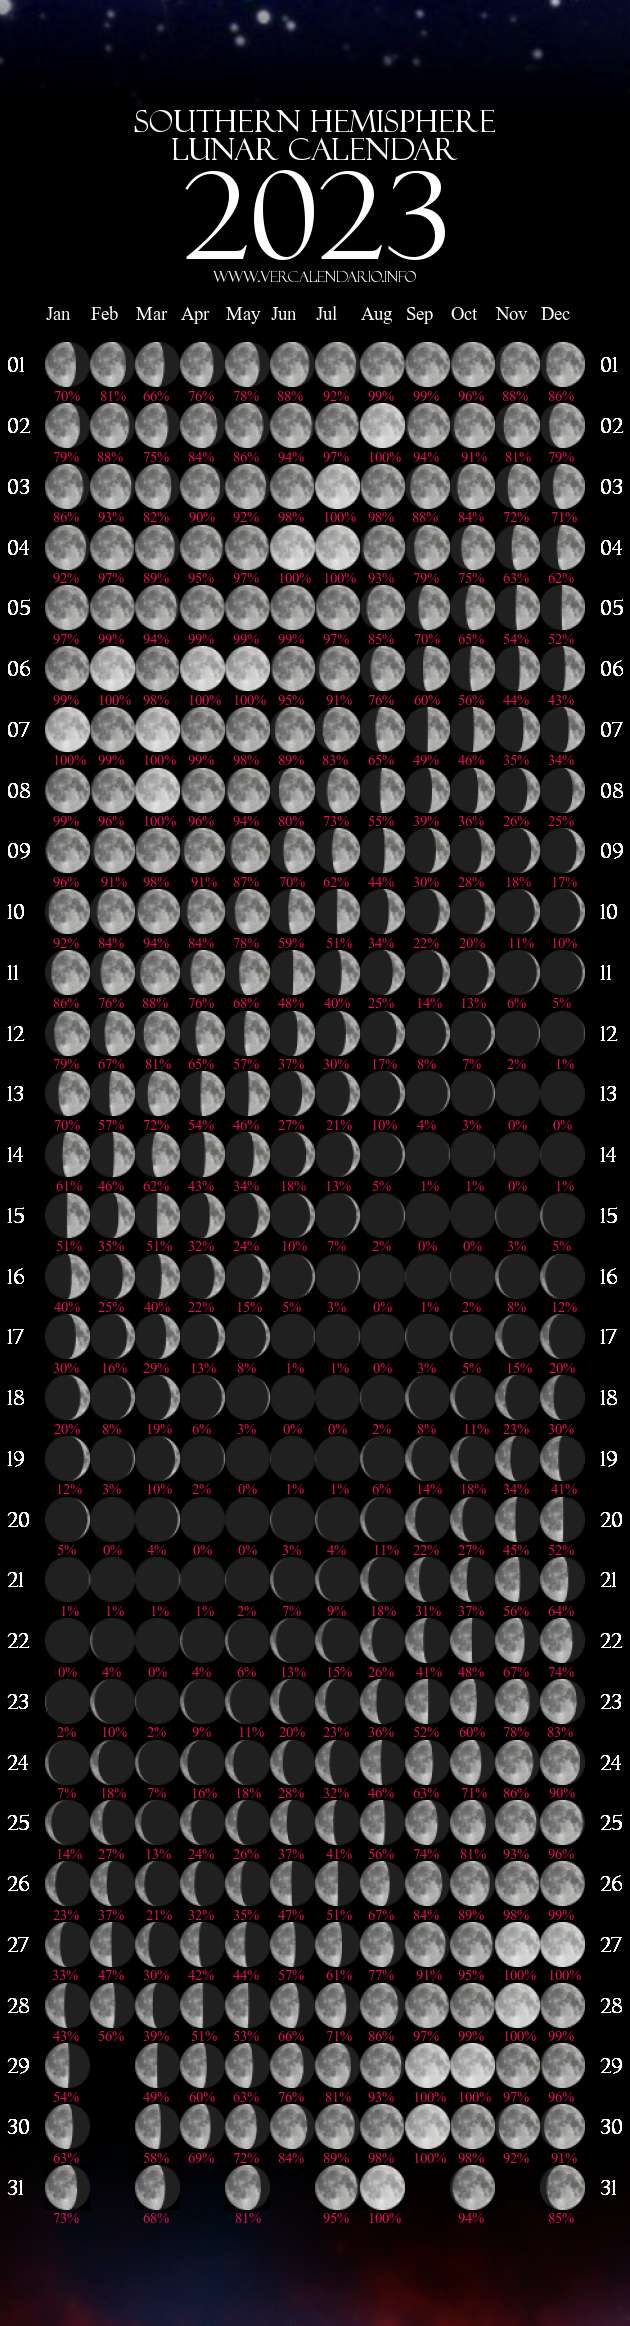 moon-phases-calendar-2023